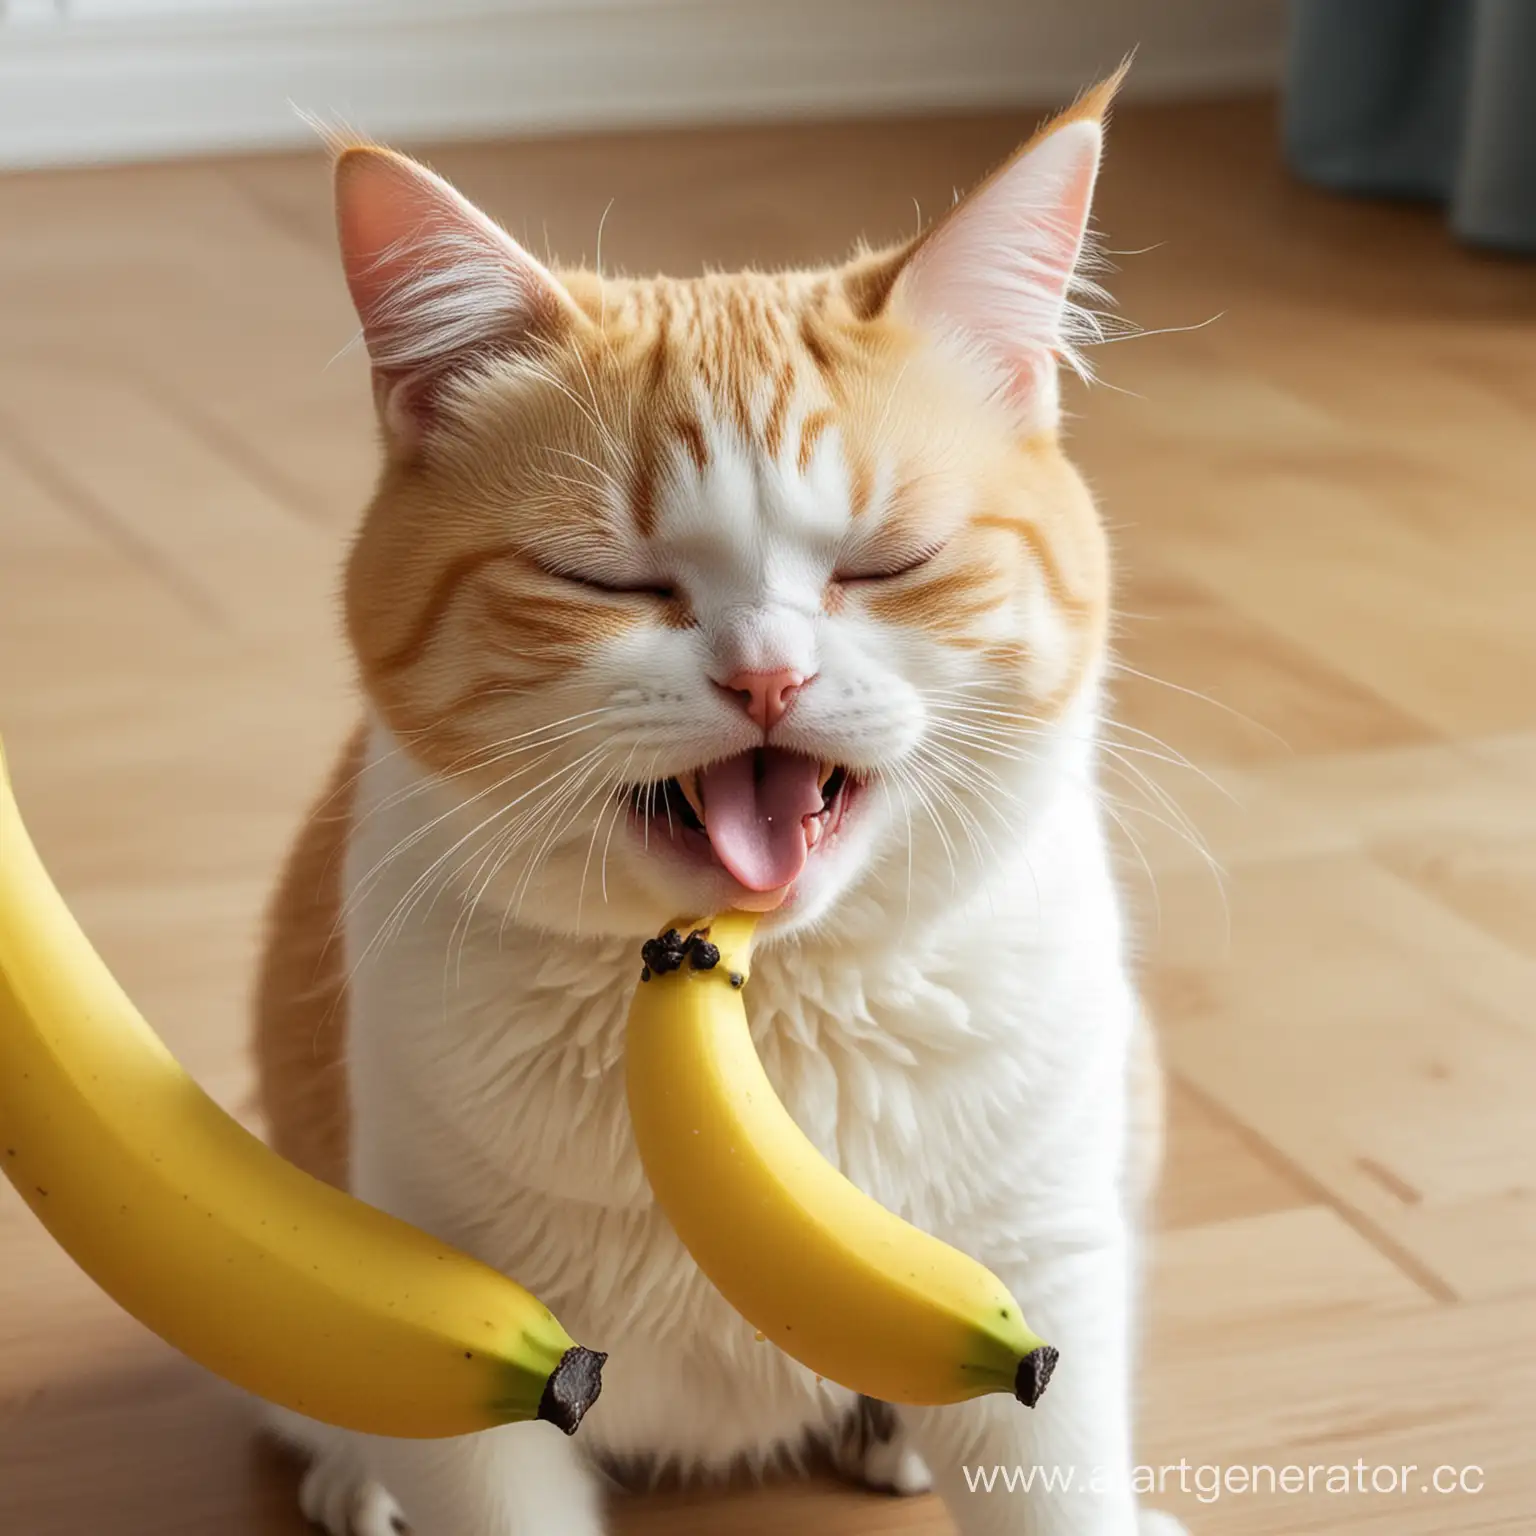 Sad-Banana-Cat-Crying-Illustration-of-a-Distressed-FruitFeline-Hybrid